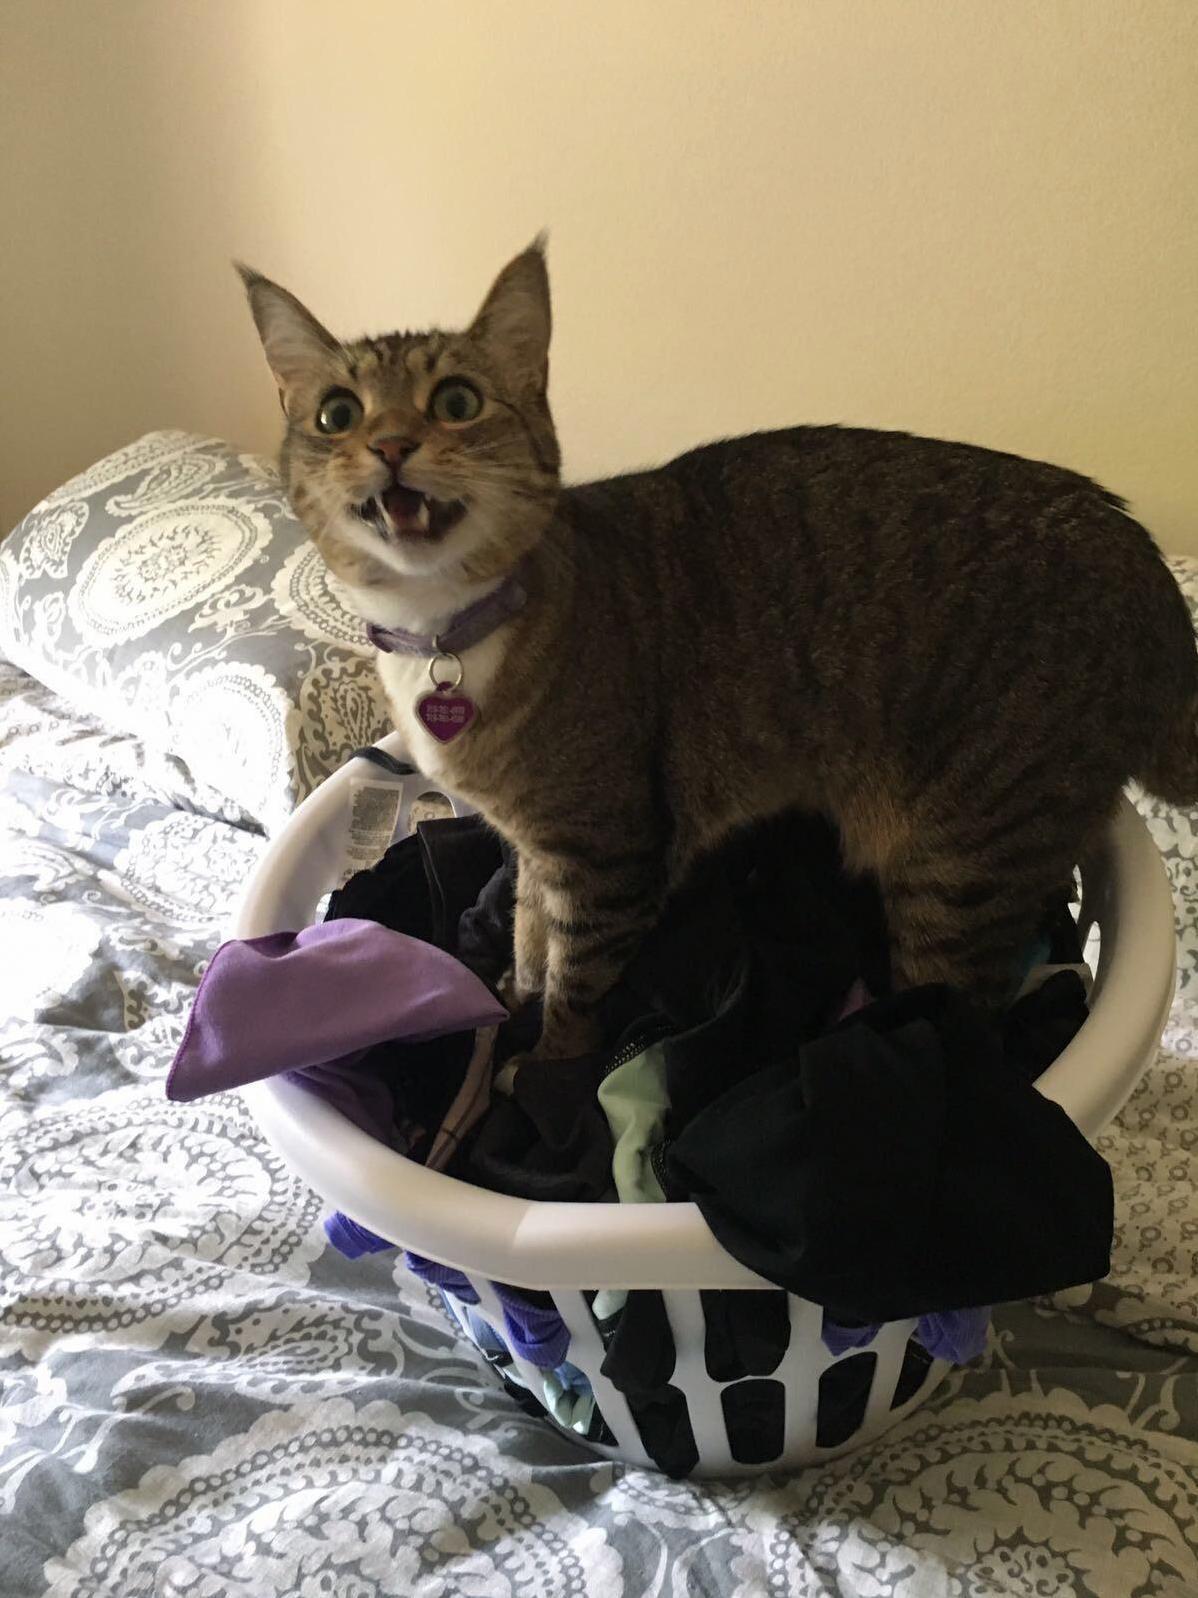 Gamora enjoys the feel of warm laundry